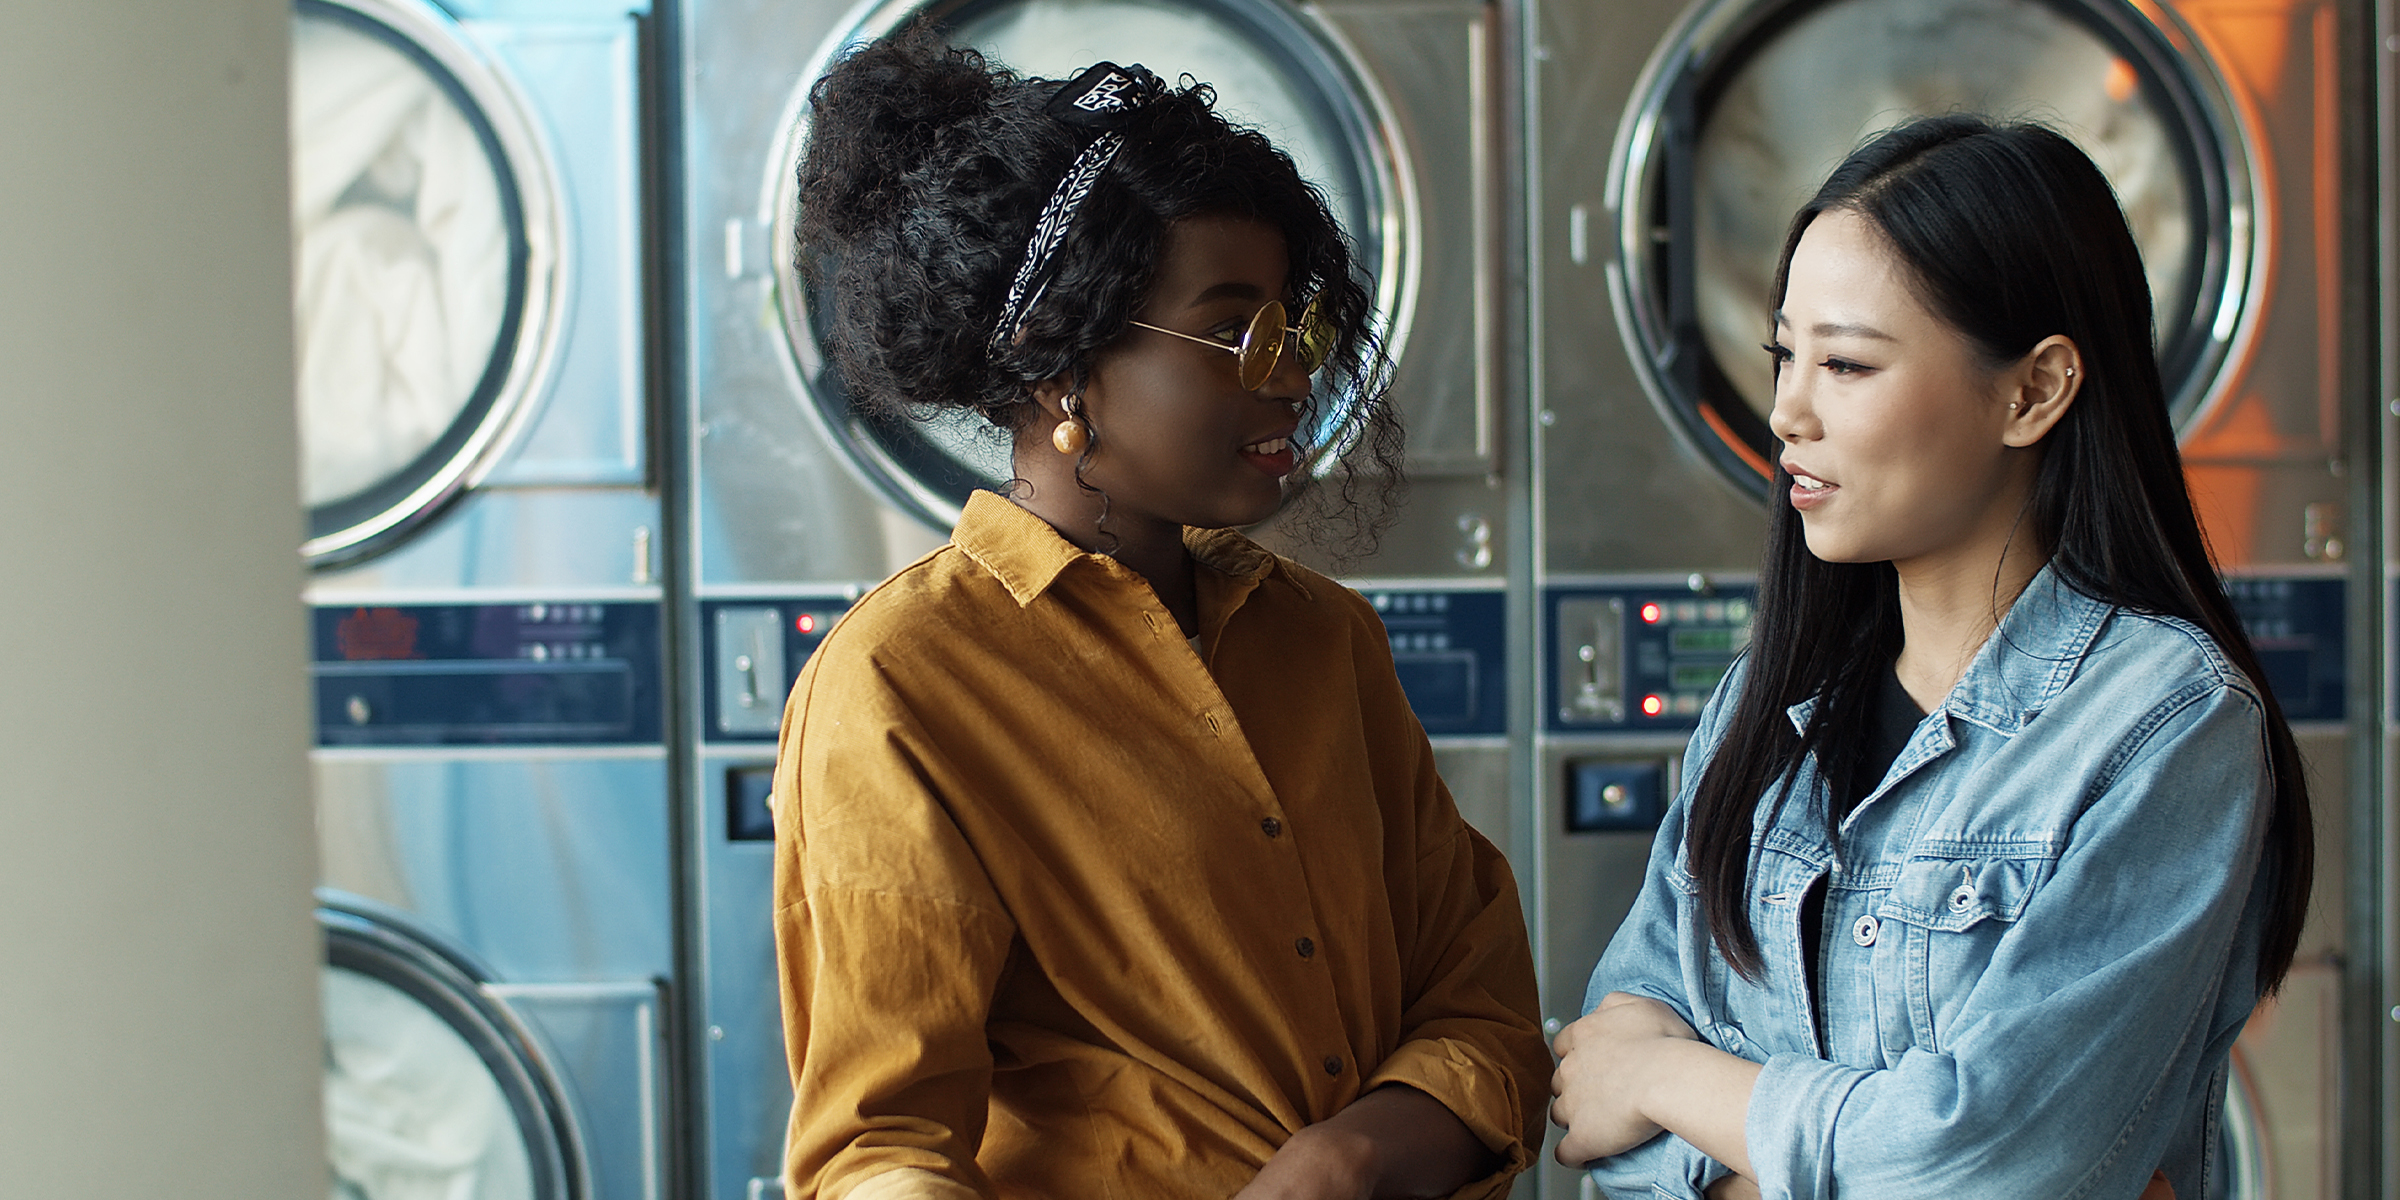 Two women in a laundromat | Source: Shutterstock